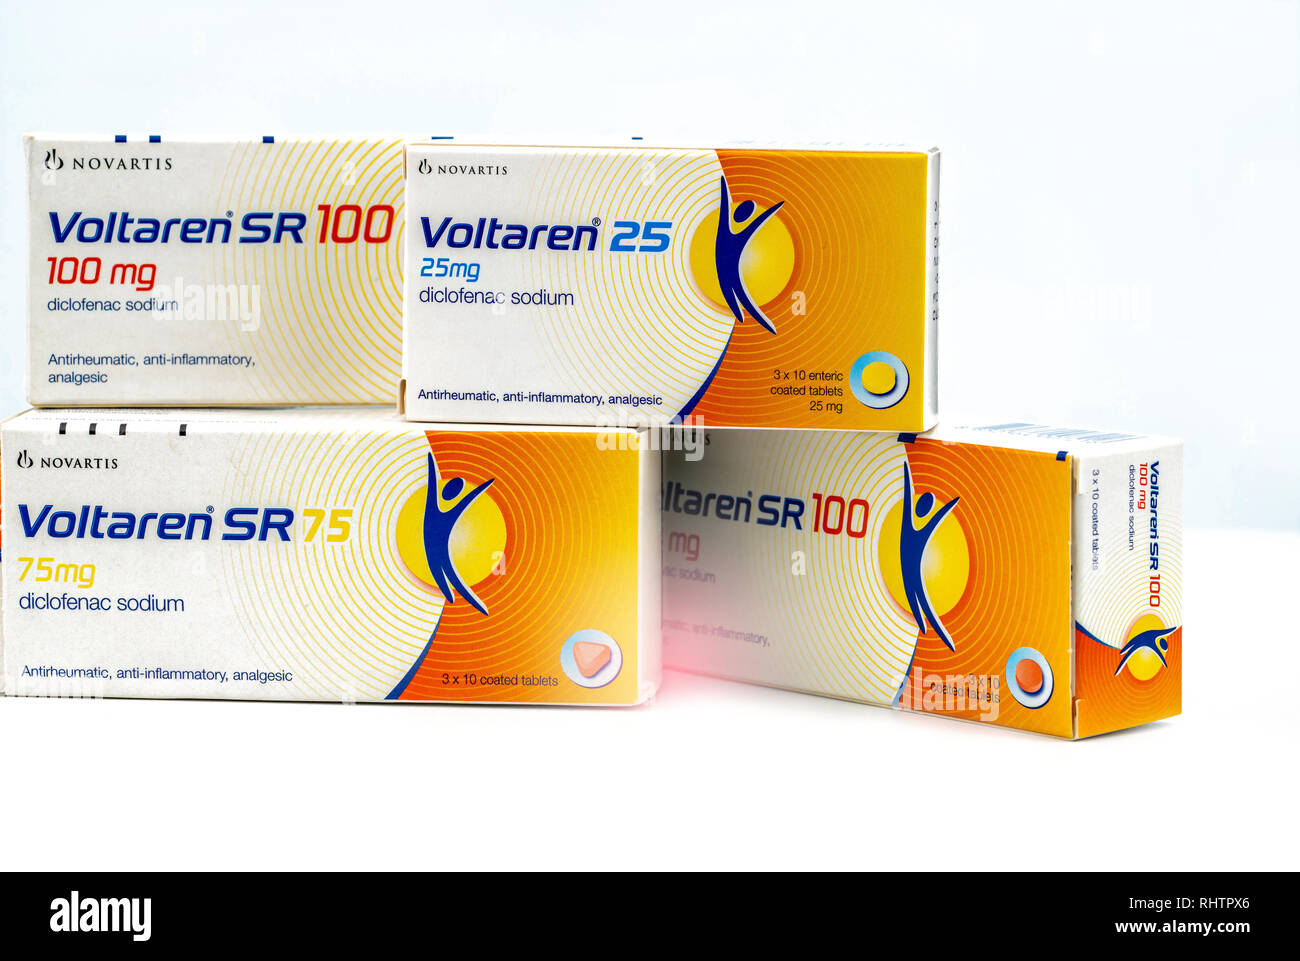 CHONBURI, THAILAND-AUGUST 3, 2018 : Voltaren 25 mg, 75 mg, 100 mg. Diclofenac sodium product of Novartis. Manufactured by Novartis,Turkey for Novatis  Stock Photo